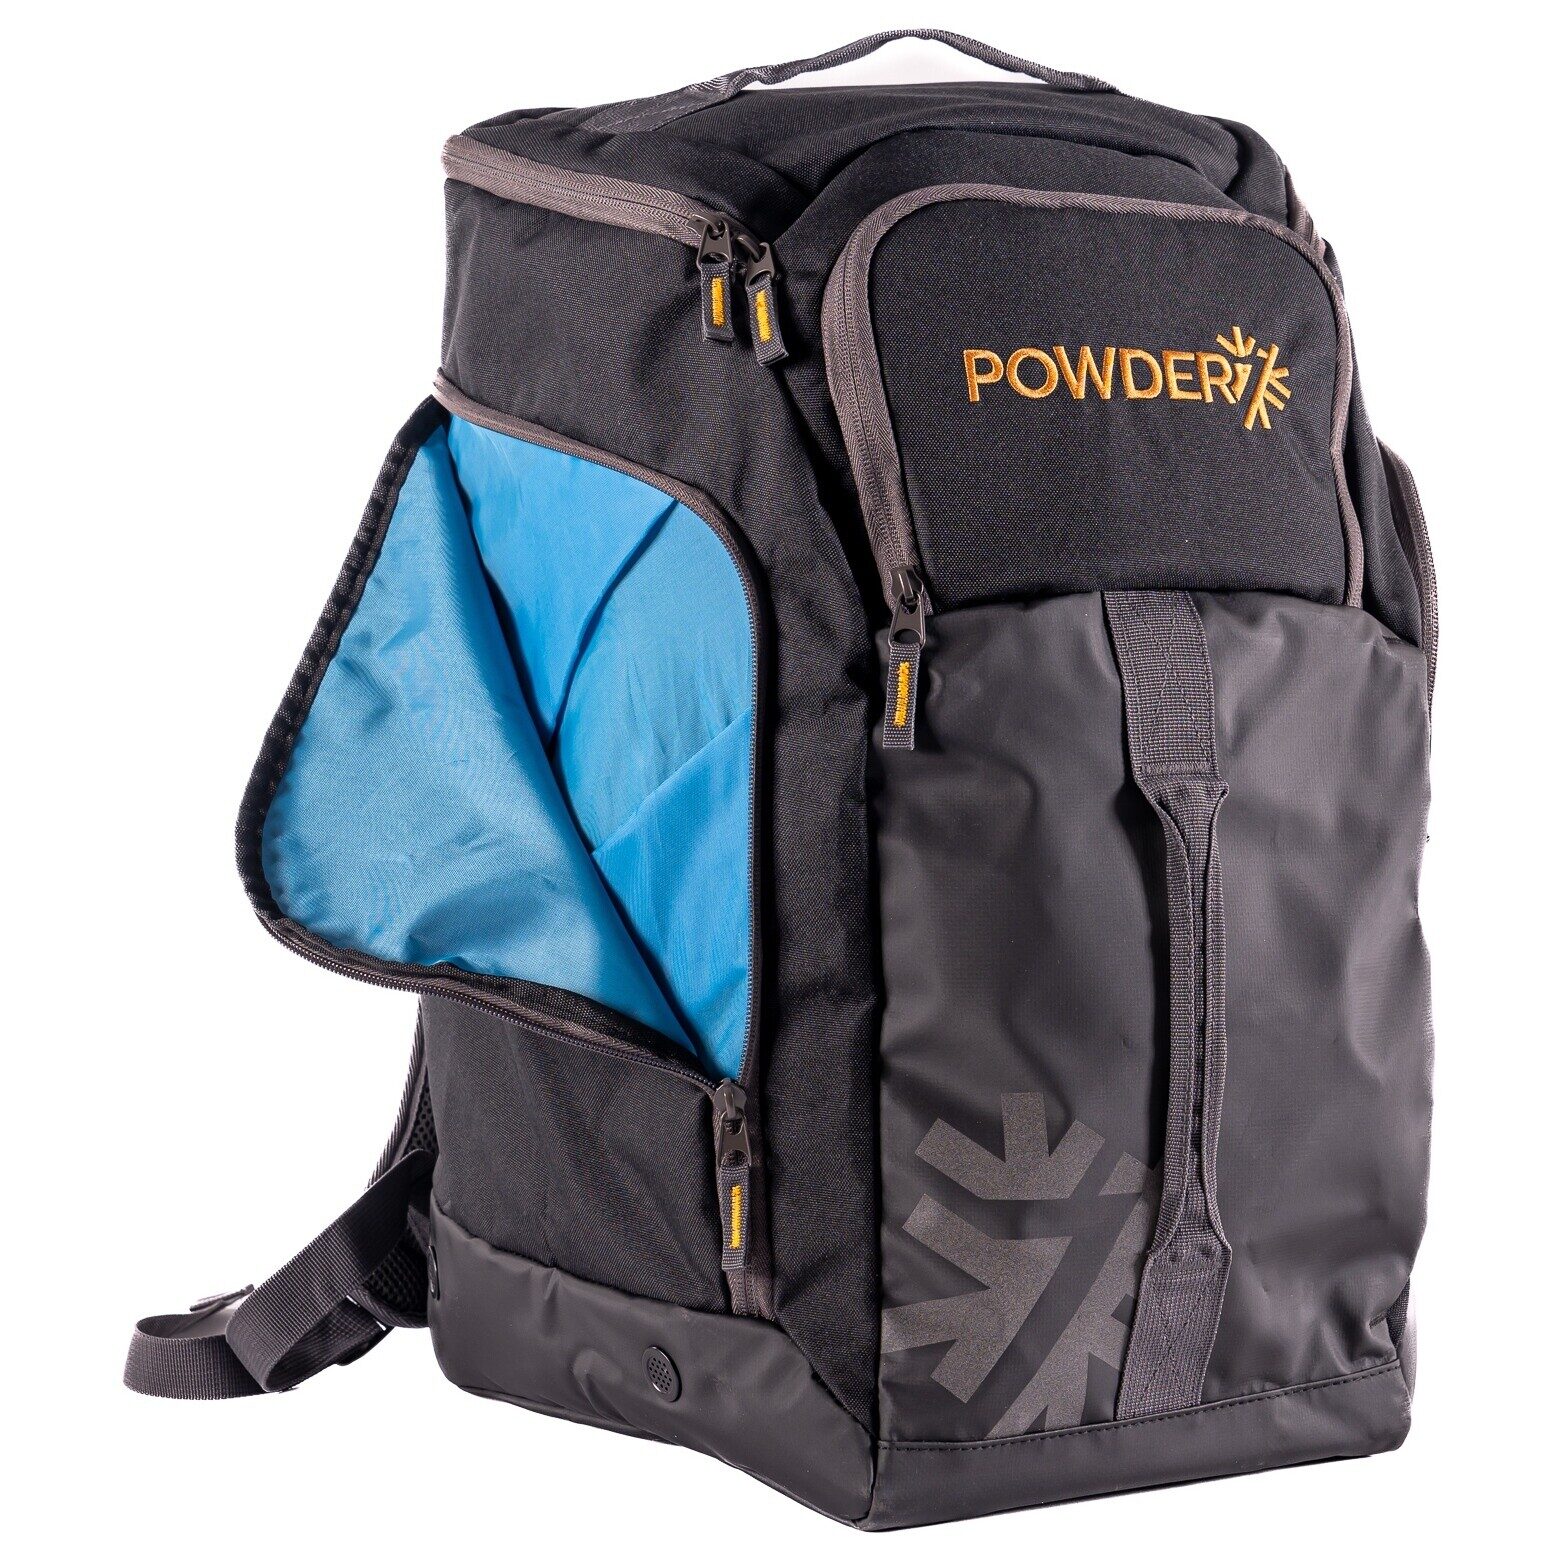 Powder7 Skicationer Boot Backpack Ski Boot Bag - Powder7